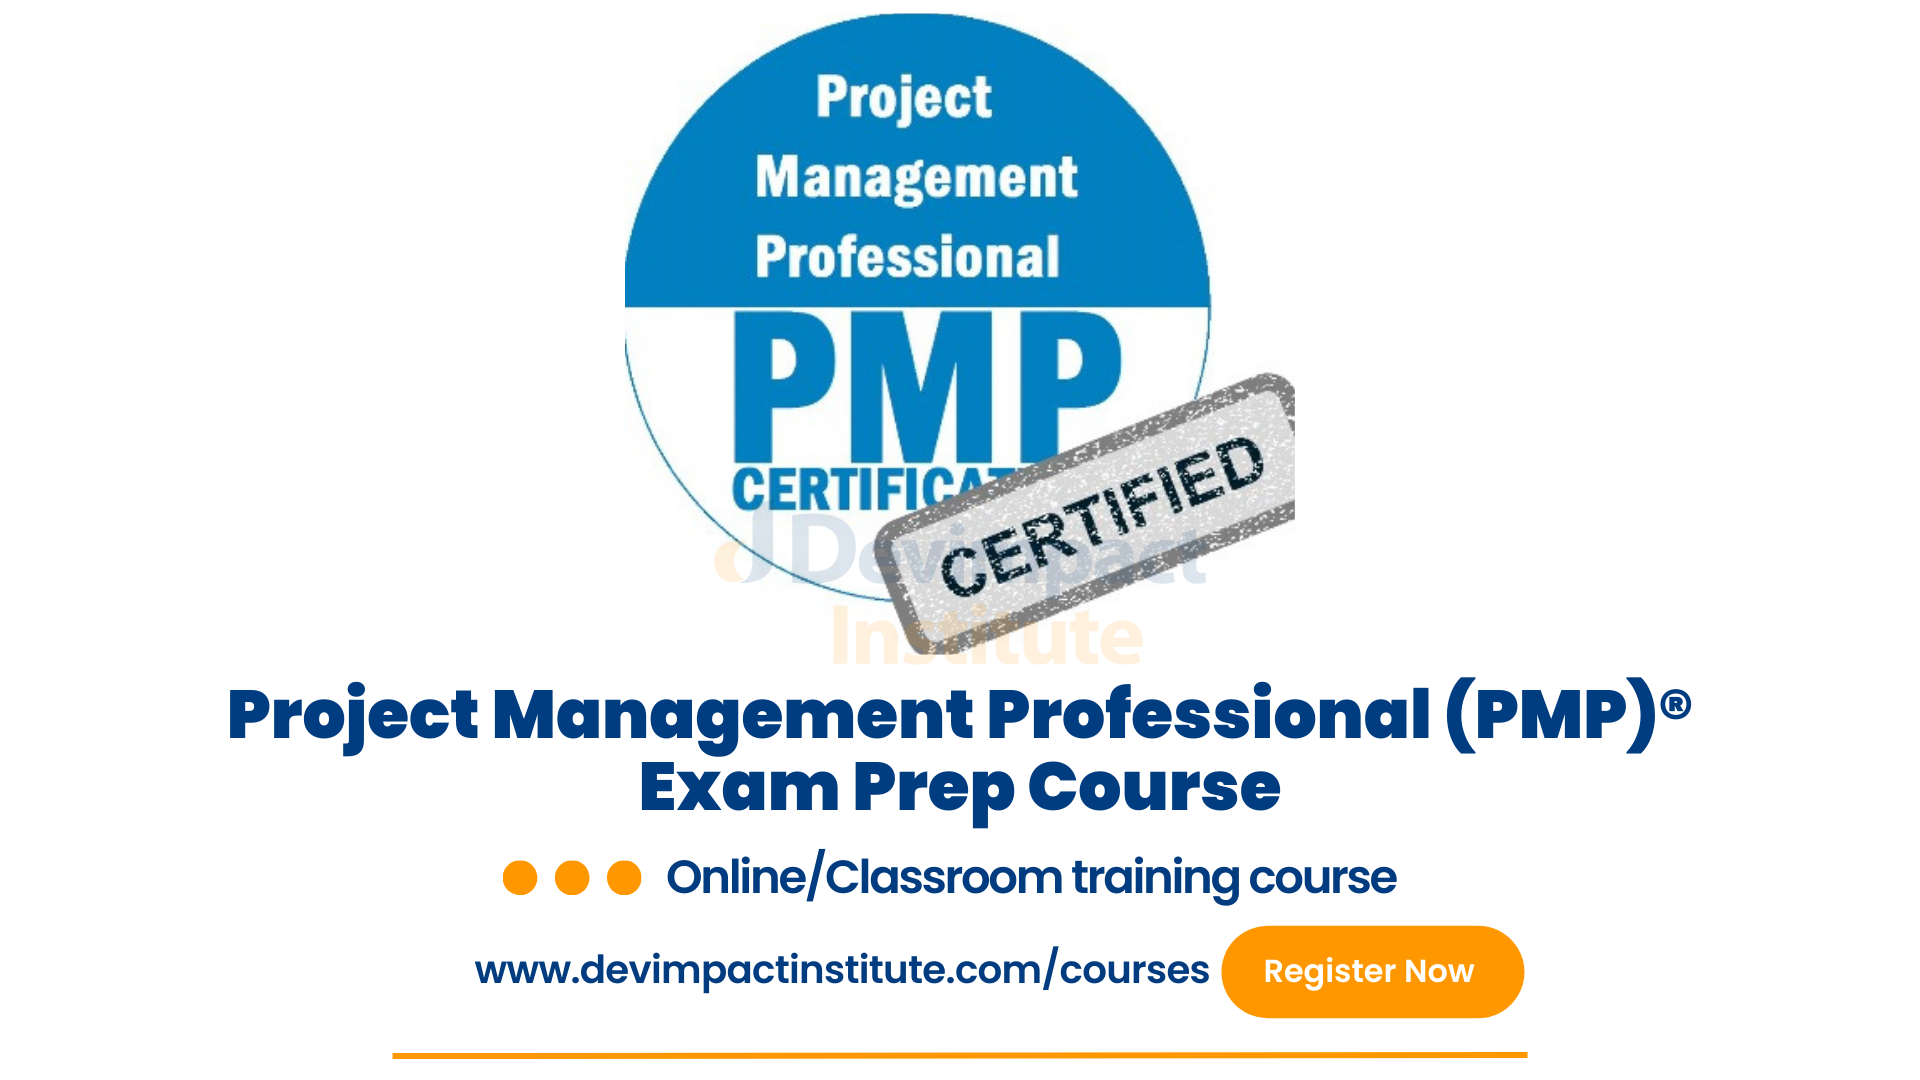 Project Management Professional (PMP)® Exam Prep Course, Online Event